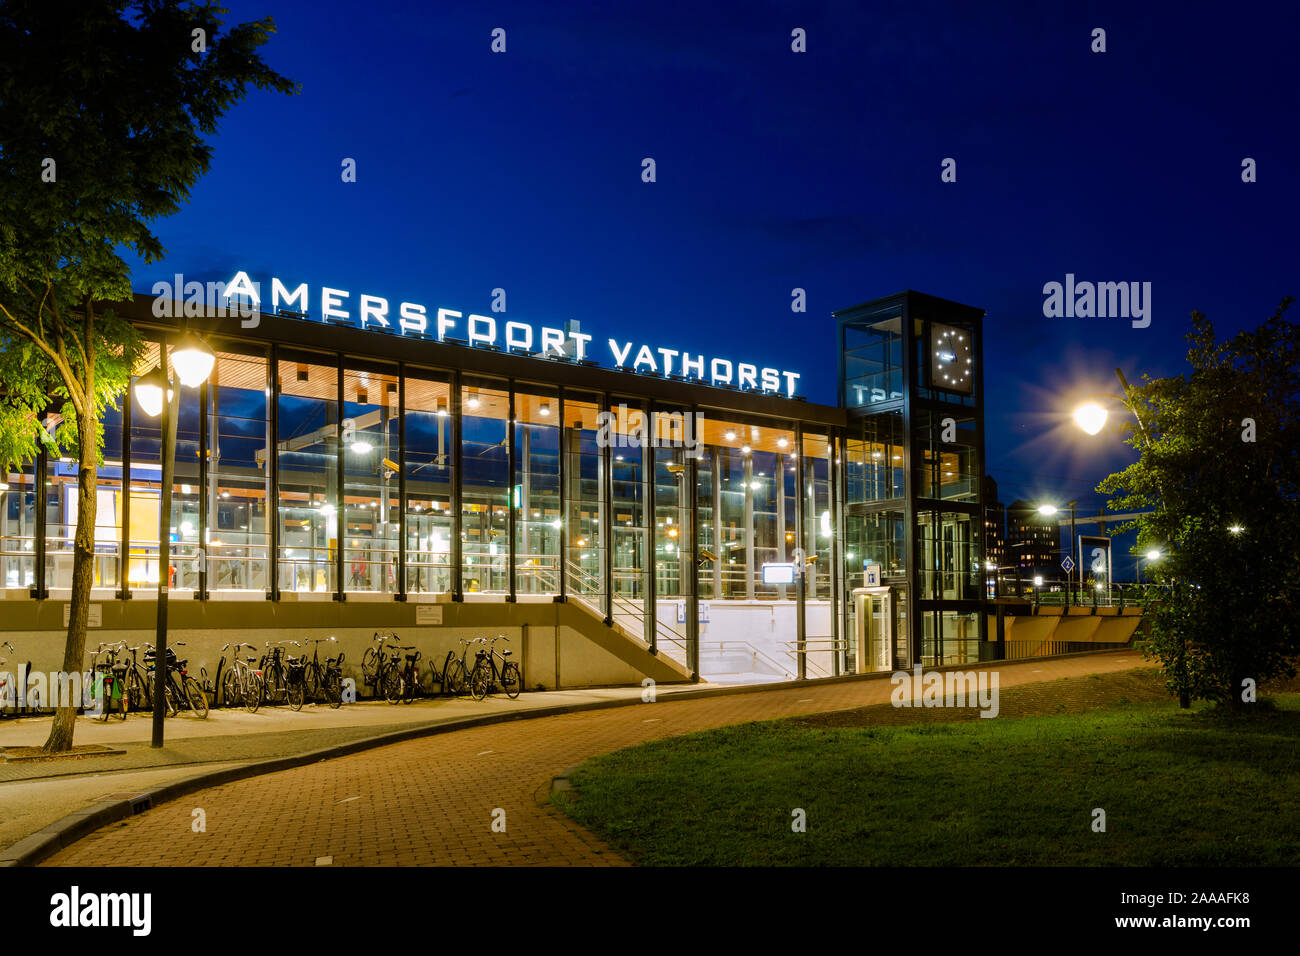 AMERSFOORT, THE NETHERLANDS - September 08, 2019: Illuminated train station Amersfoort Vathorst during blue hour with empty platform and parked bikes Stock Photo